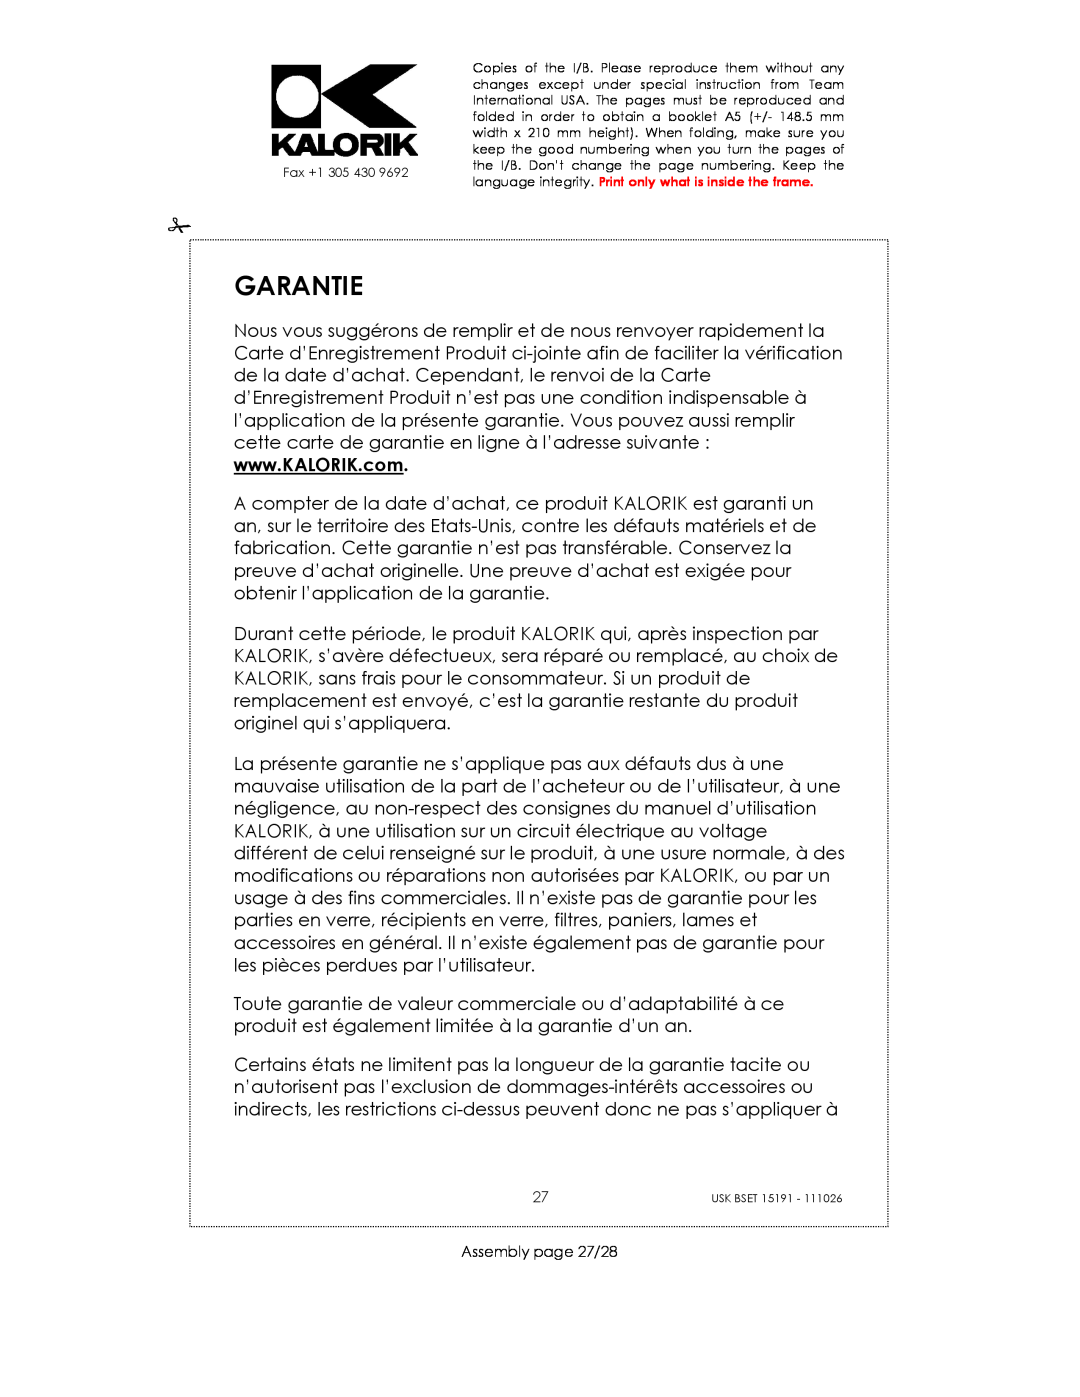 Kalorik USK BSET 15191 manual Garantie, Assembly page 27/28 